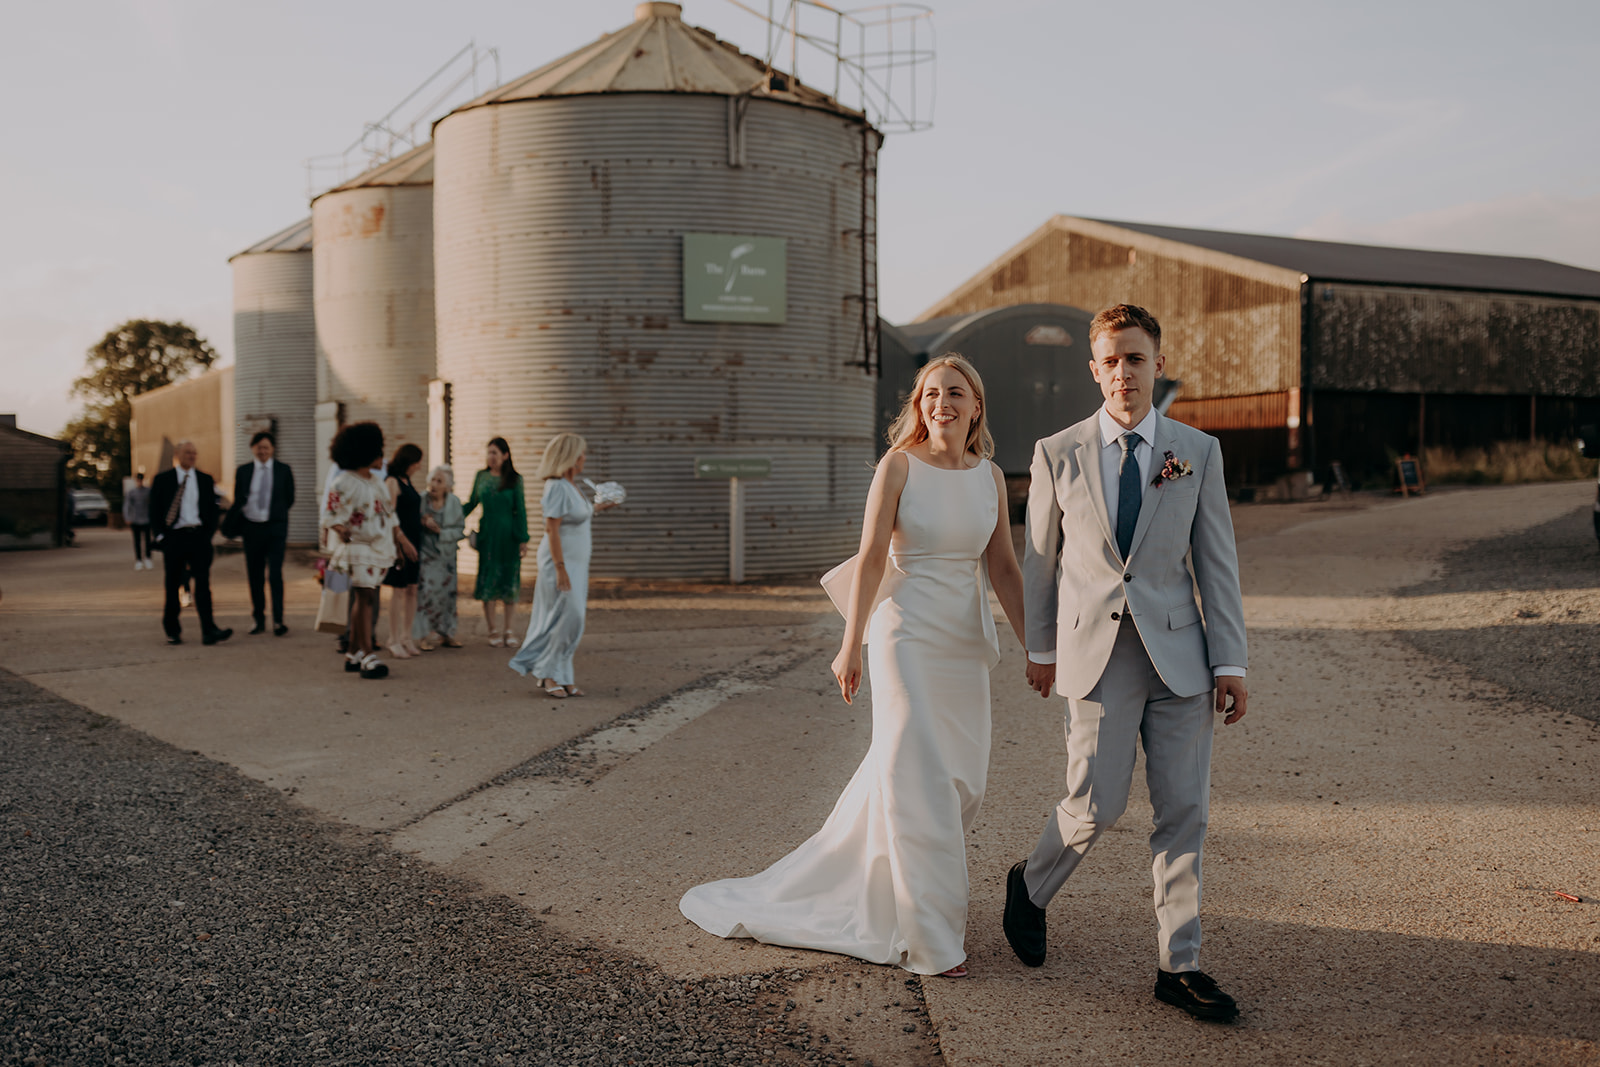 The barns at Lodge Farm wedding